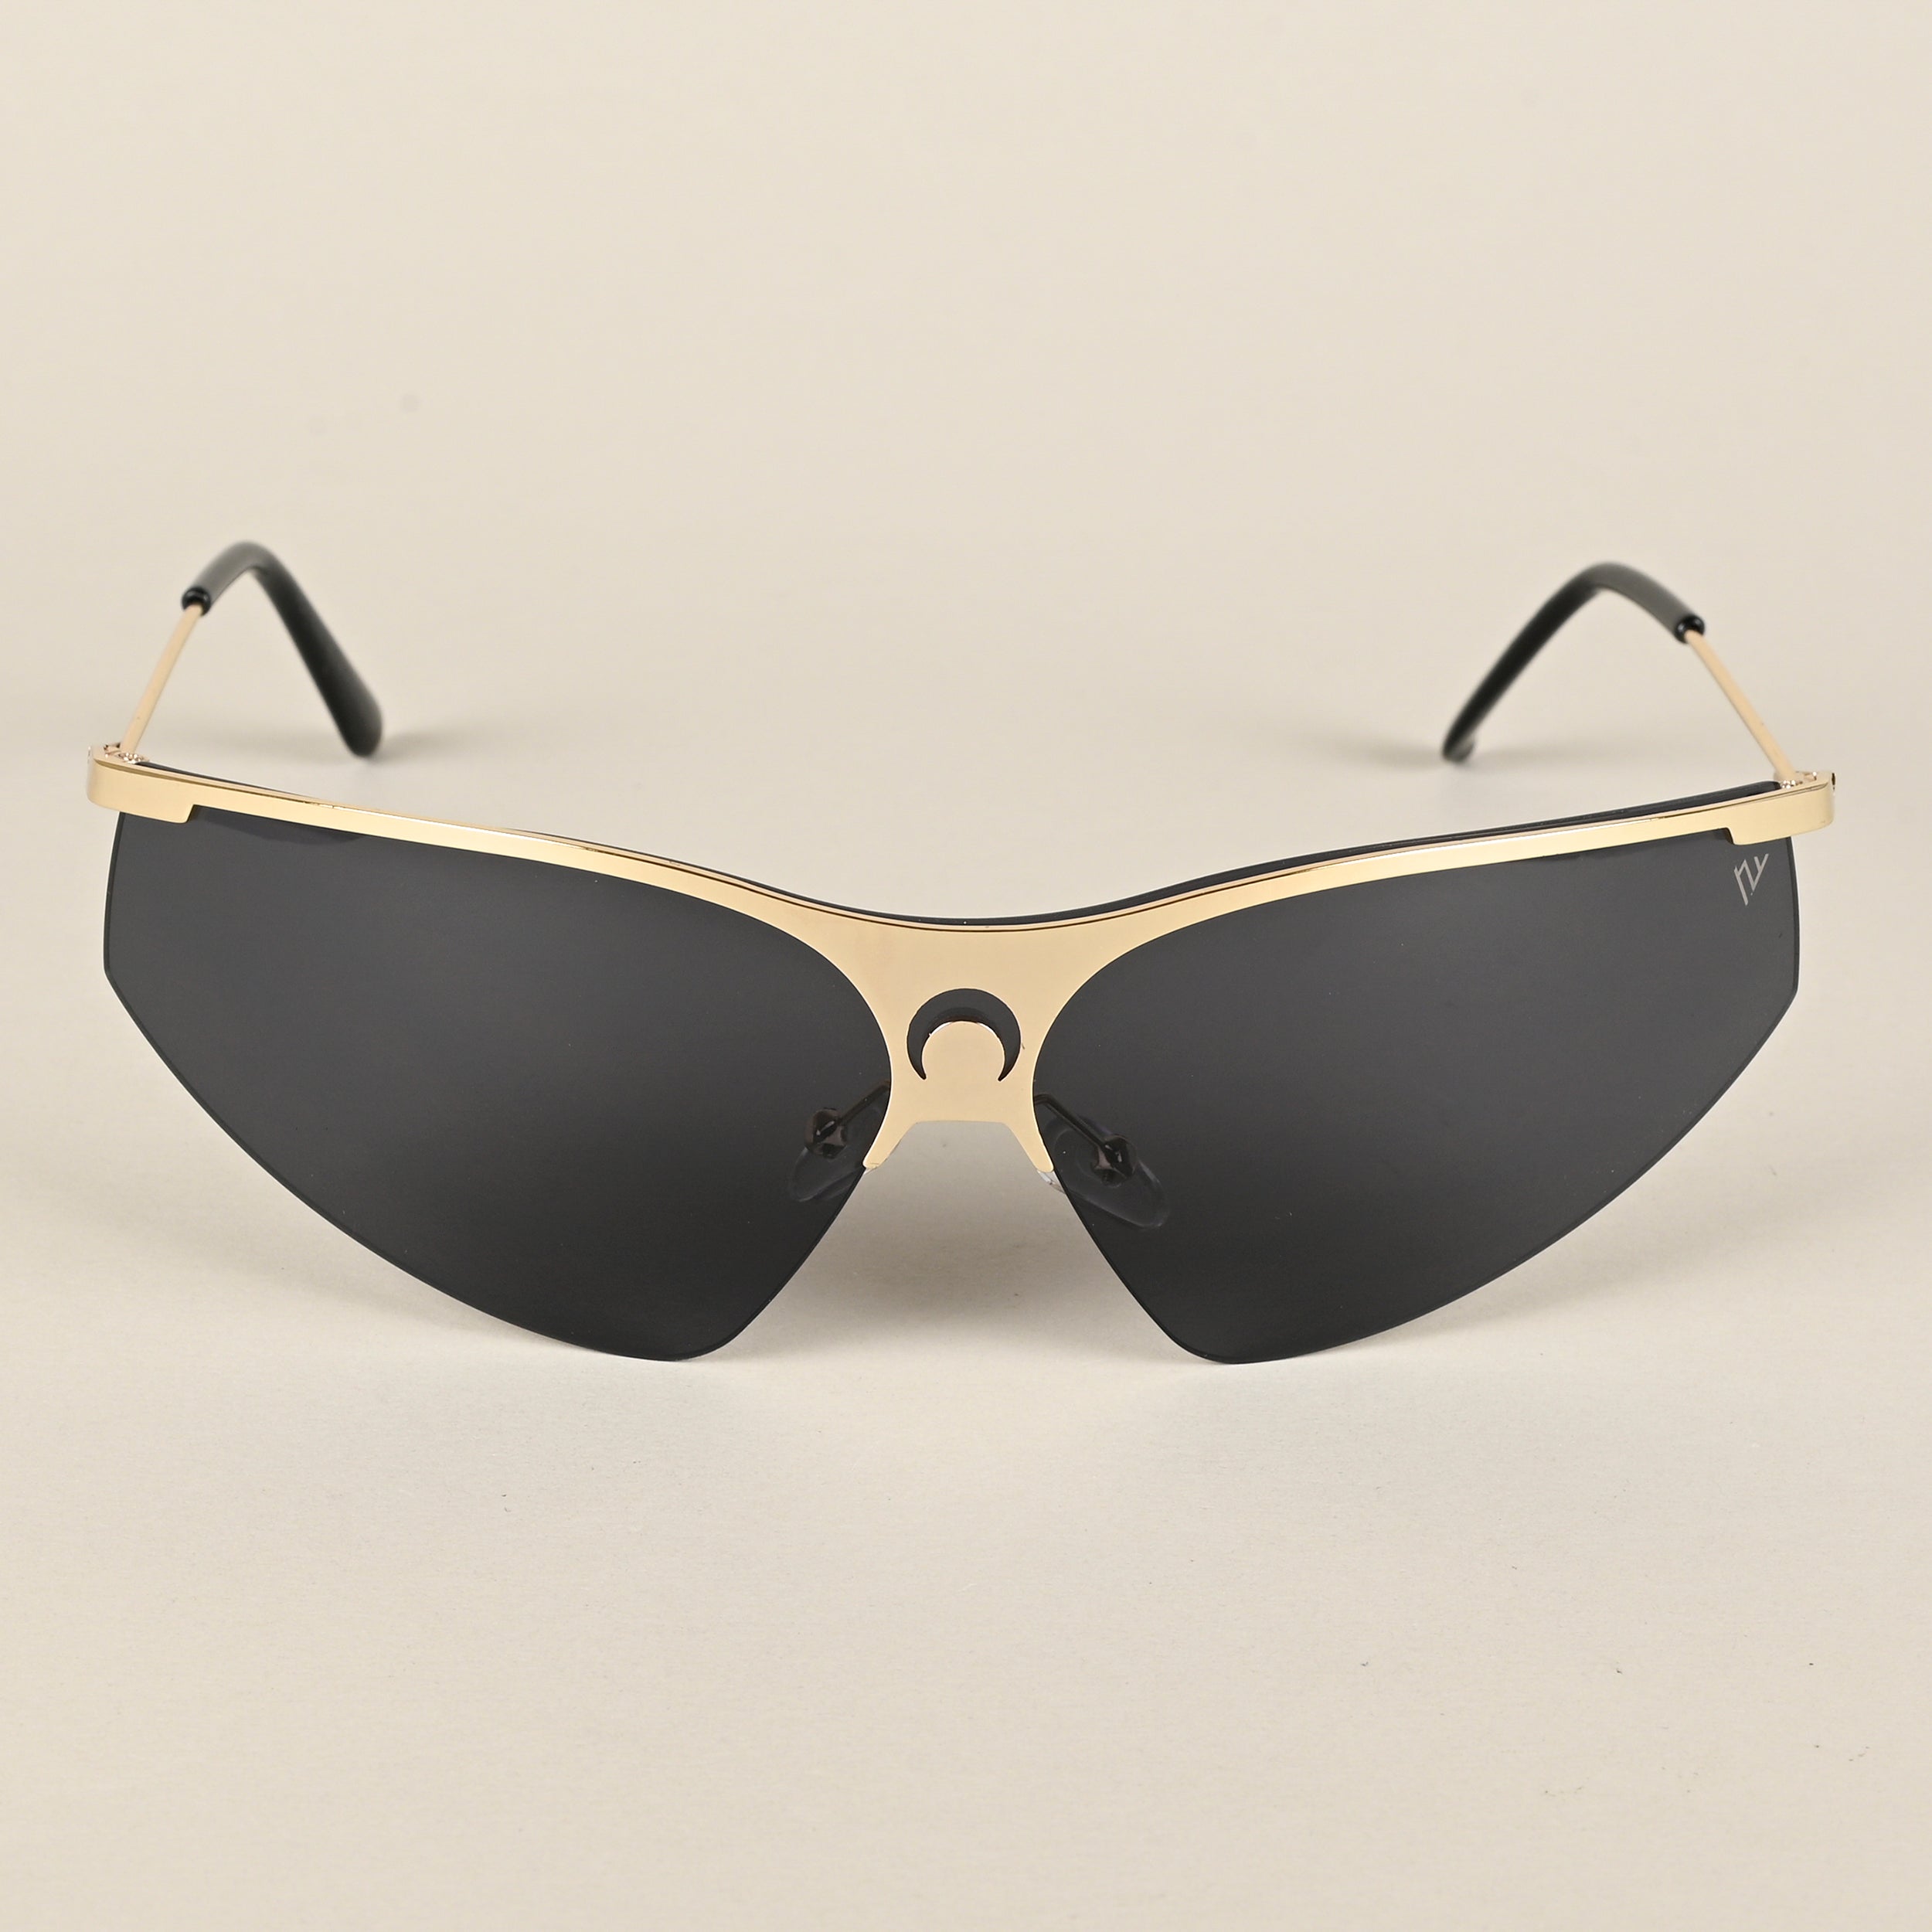 Voyage Black Wrap-Around Sunglasses for Men & Women - MG4219